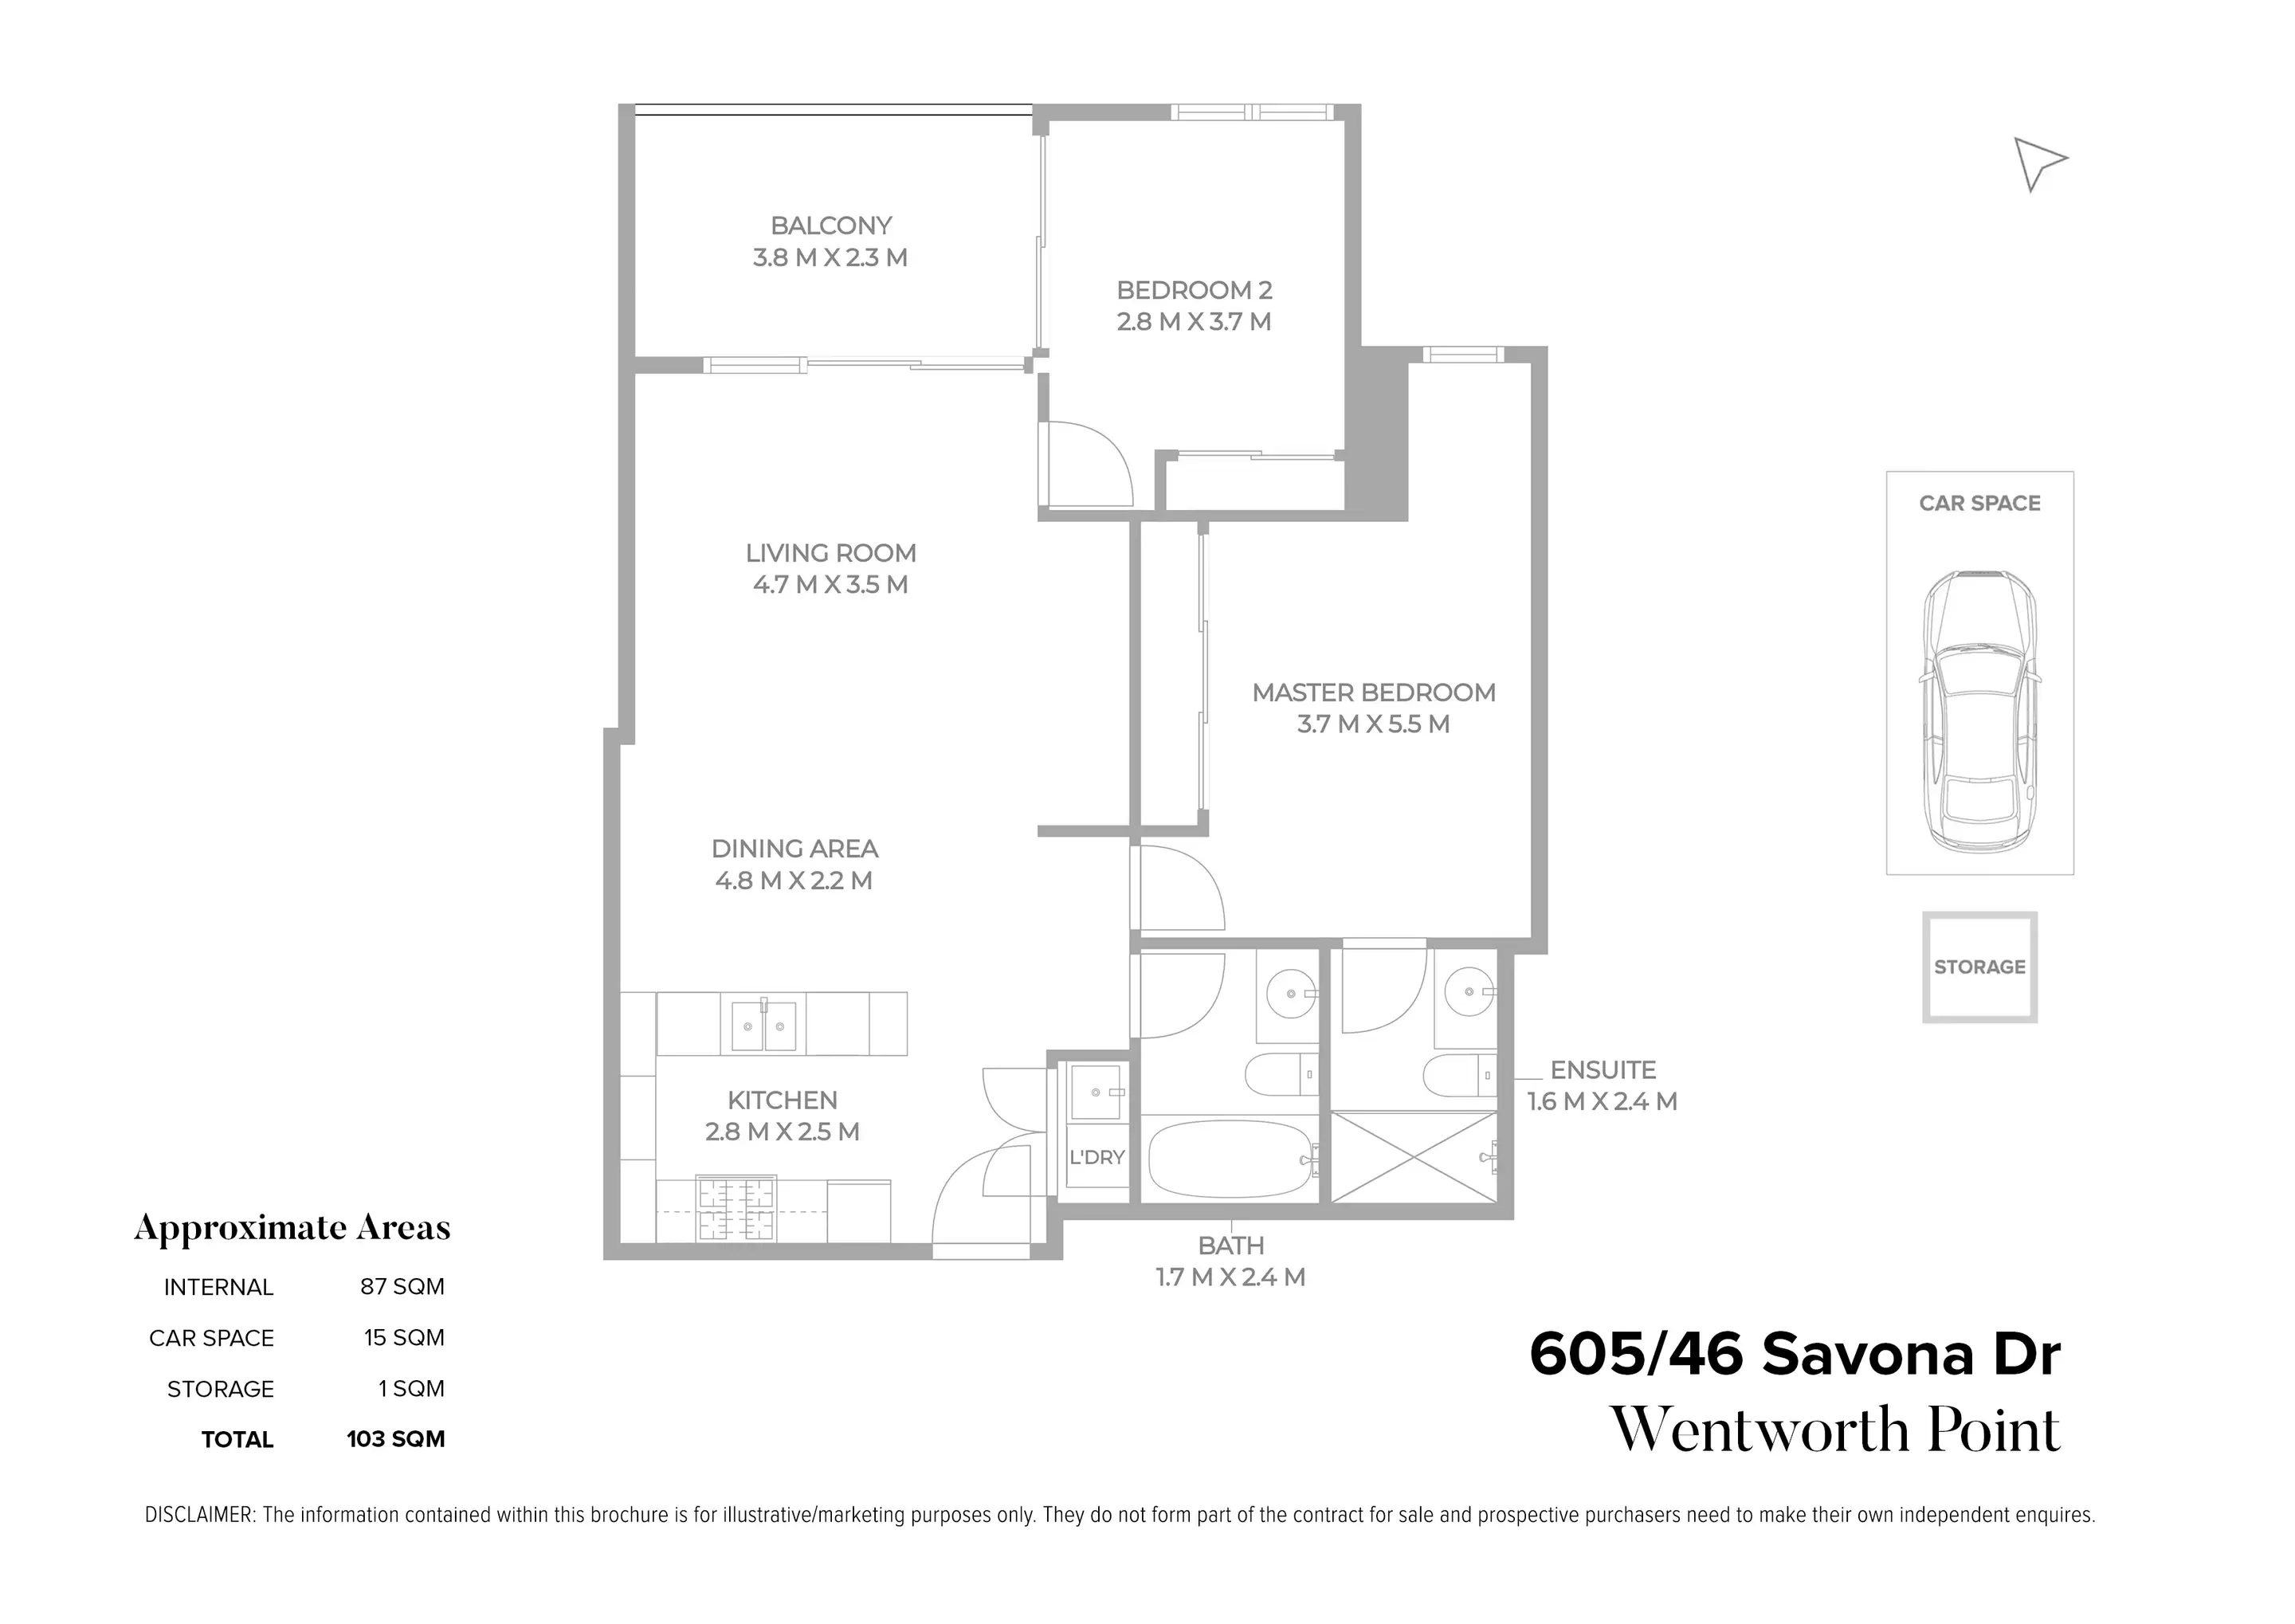 605/46 Savona Drive, Wentworth Point Sold by Chidiac Realty - floorplan